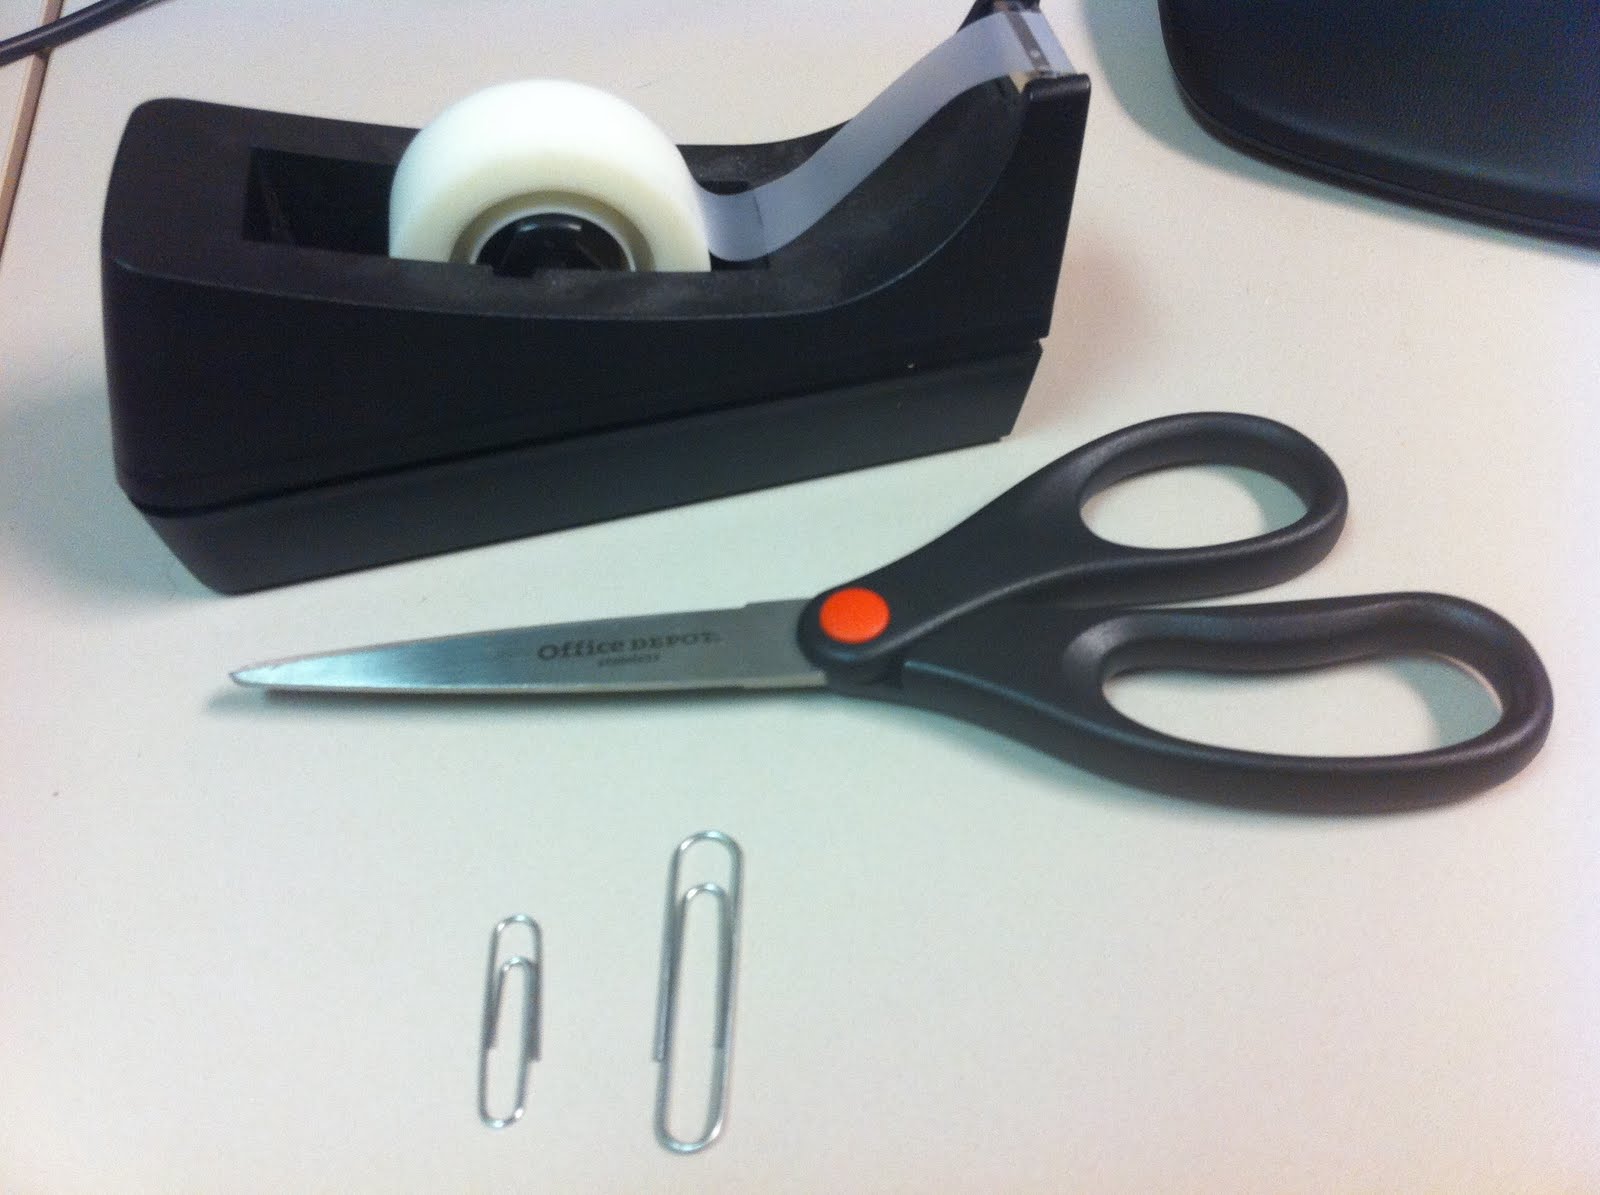 Kreyola's Journeys: How to Make A Paper Clip Interlocking Tool